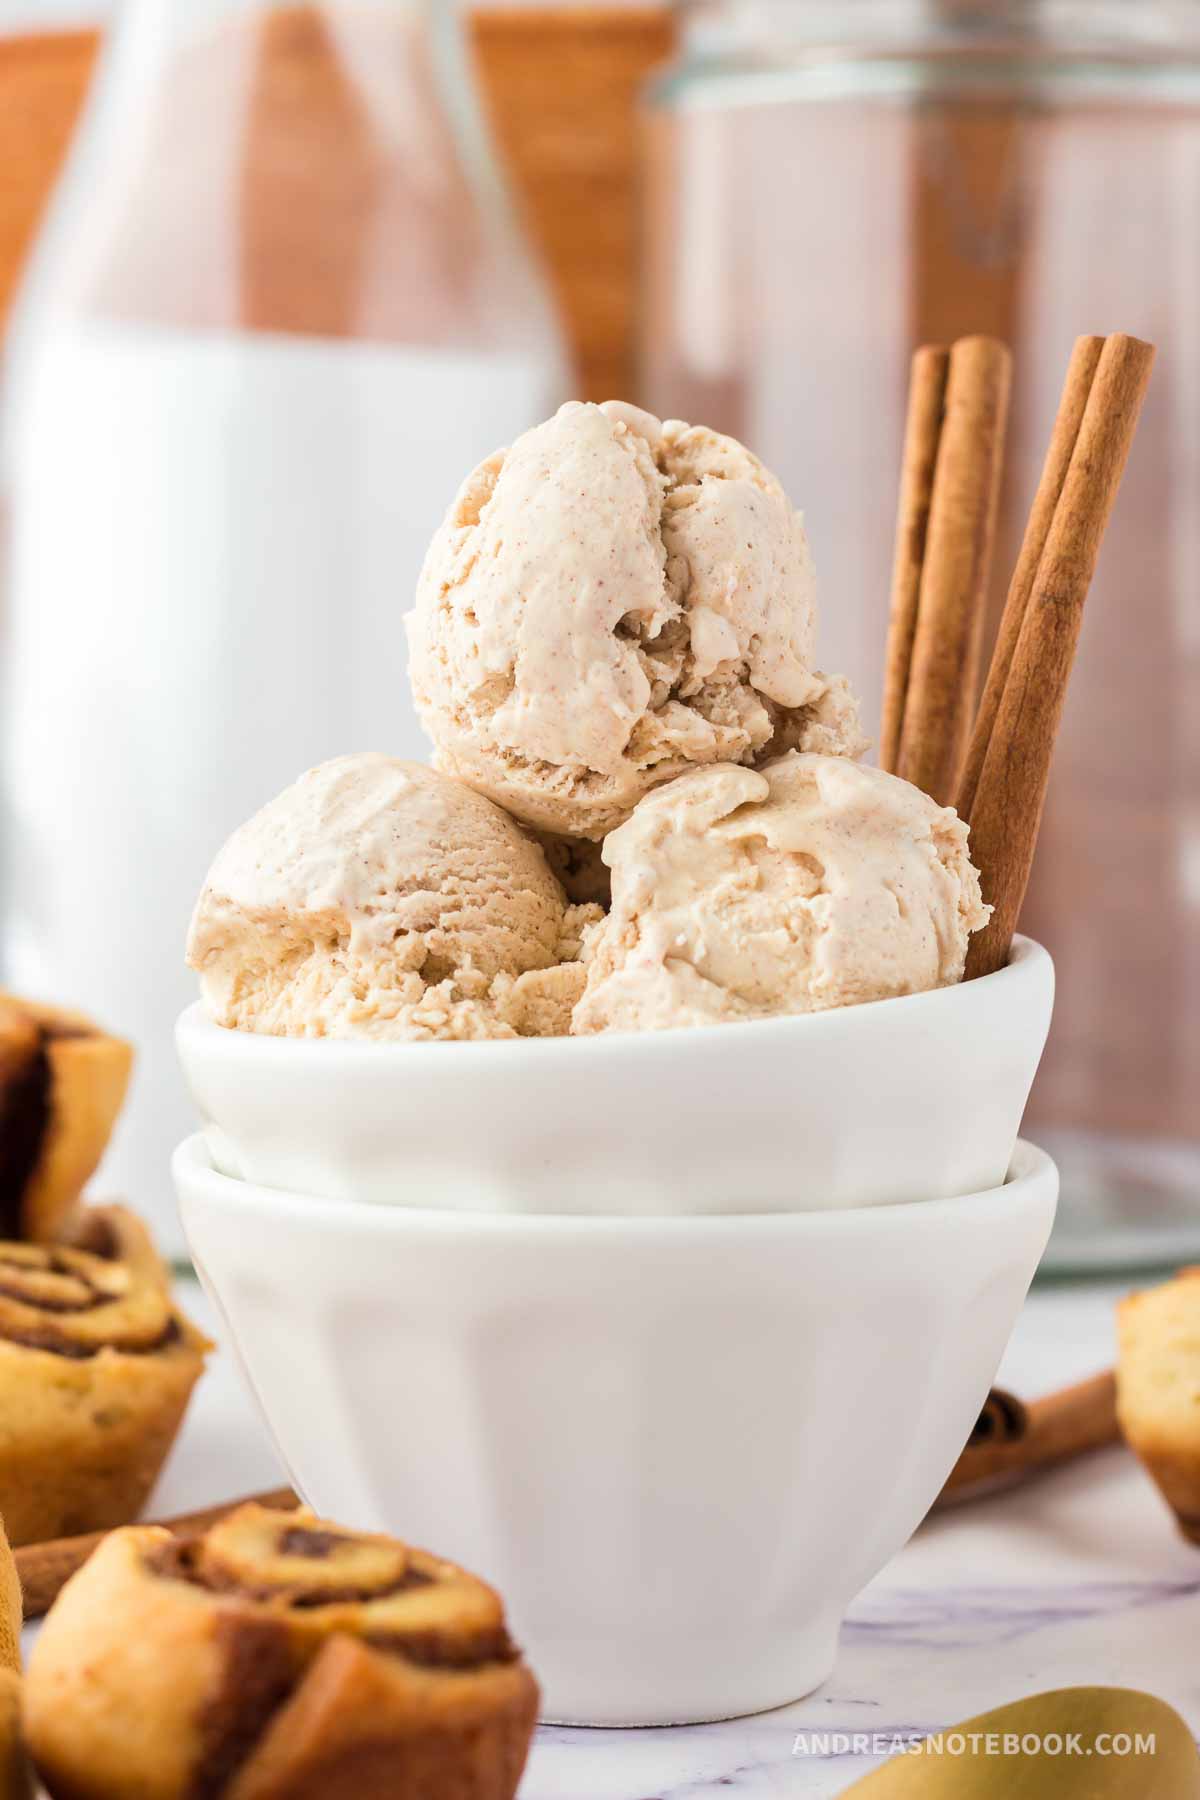 Cinnamon ice cream scoops in a bowl with cinnamon sticks.